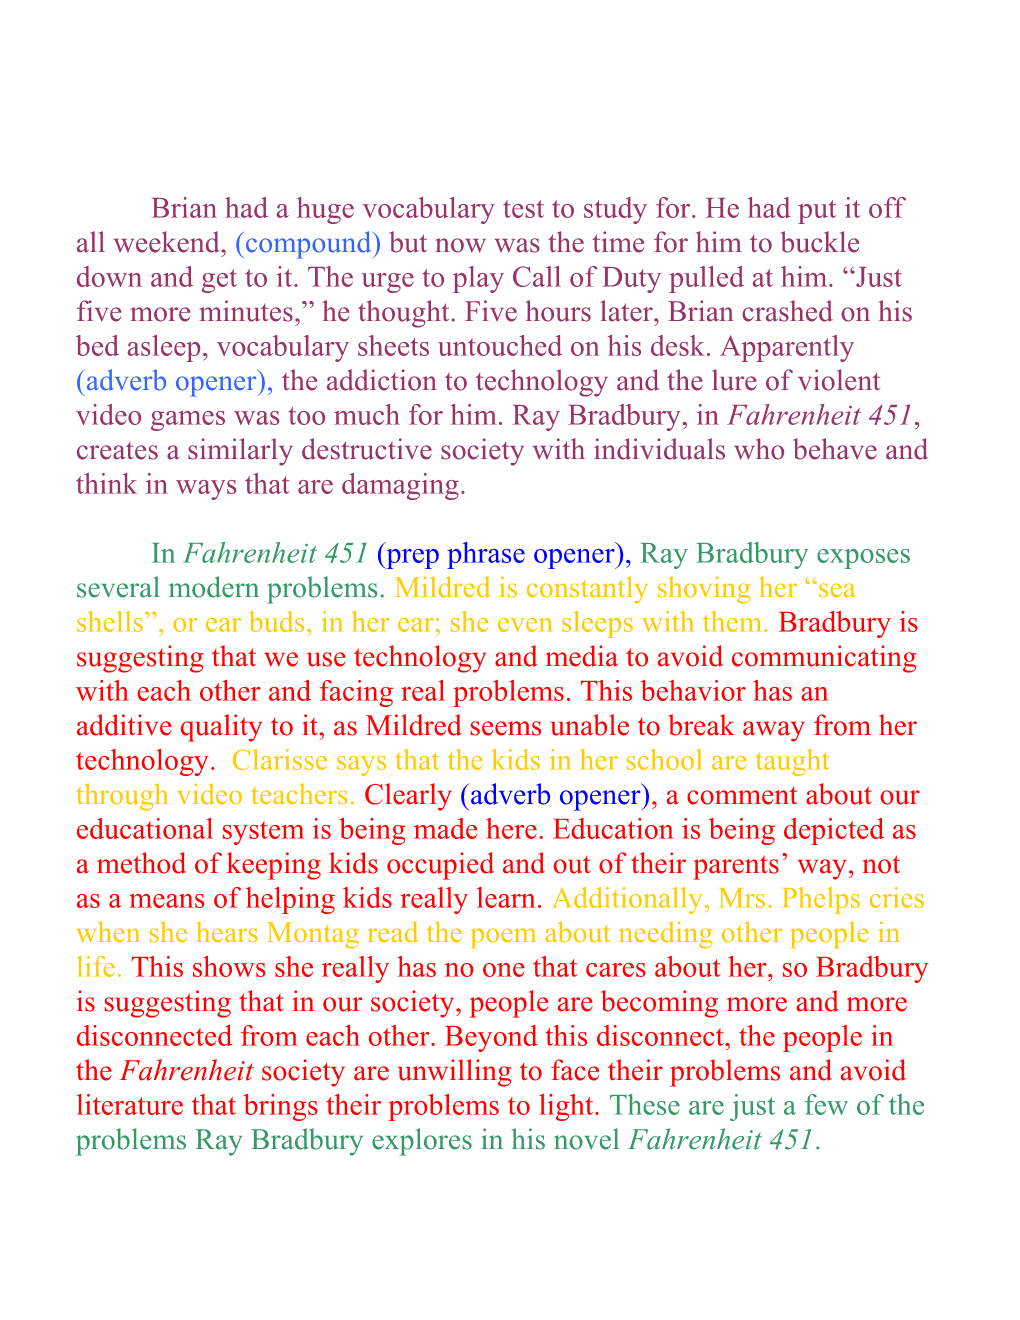 In Fahrenheit 451, Ray Bradbury Exposes Several Modern Problems